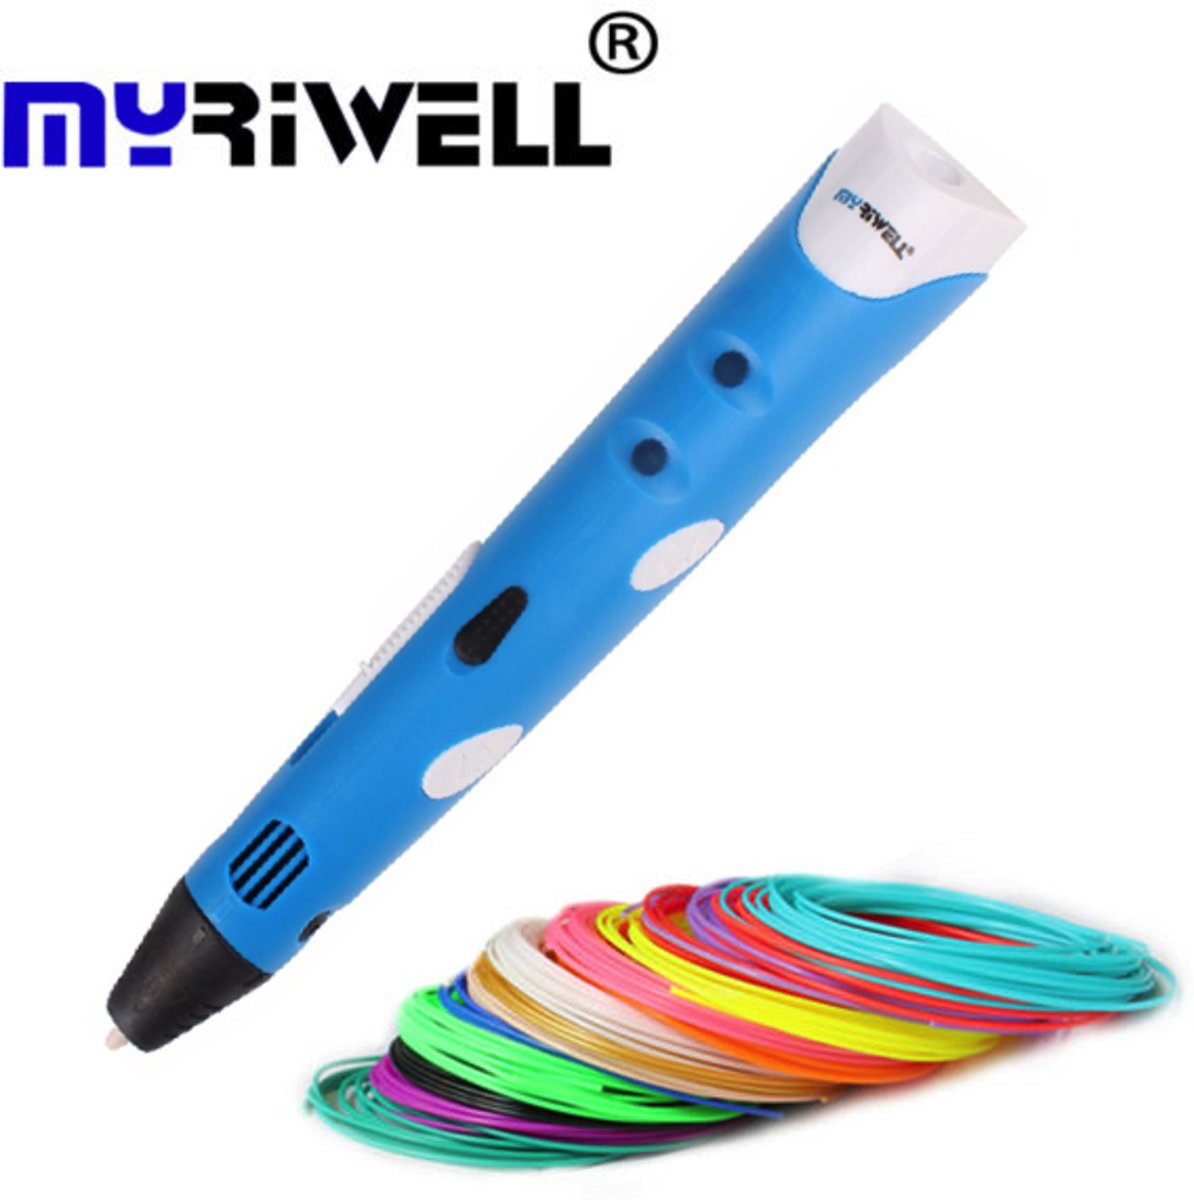 MyRiwell 2018 editie RP100A 3D Pen - 100m ABS filament in 10 kleuren  - Gratis 3D Drawing pad en gratis vingerbescherming